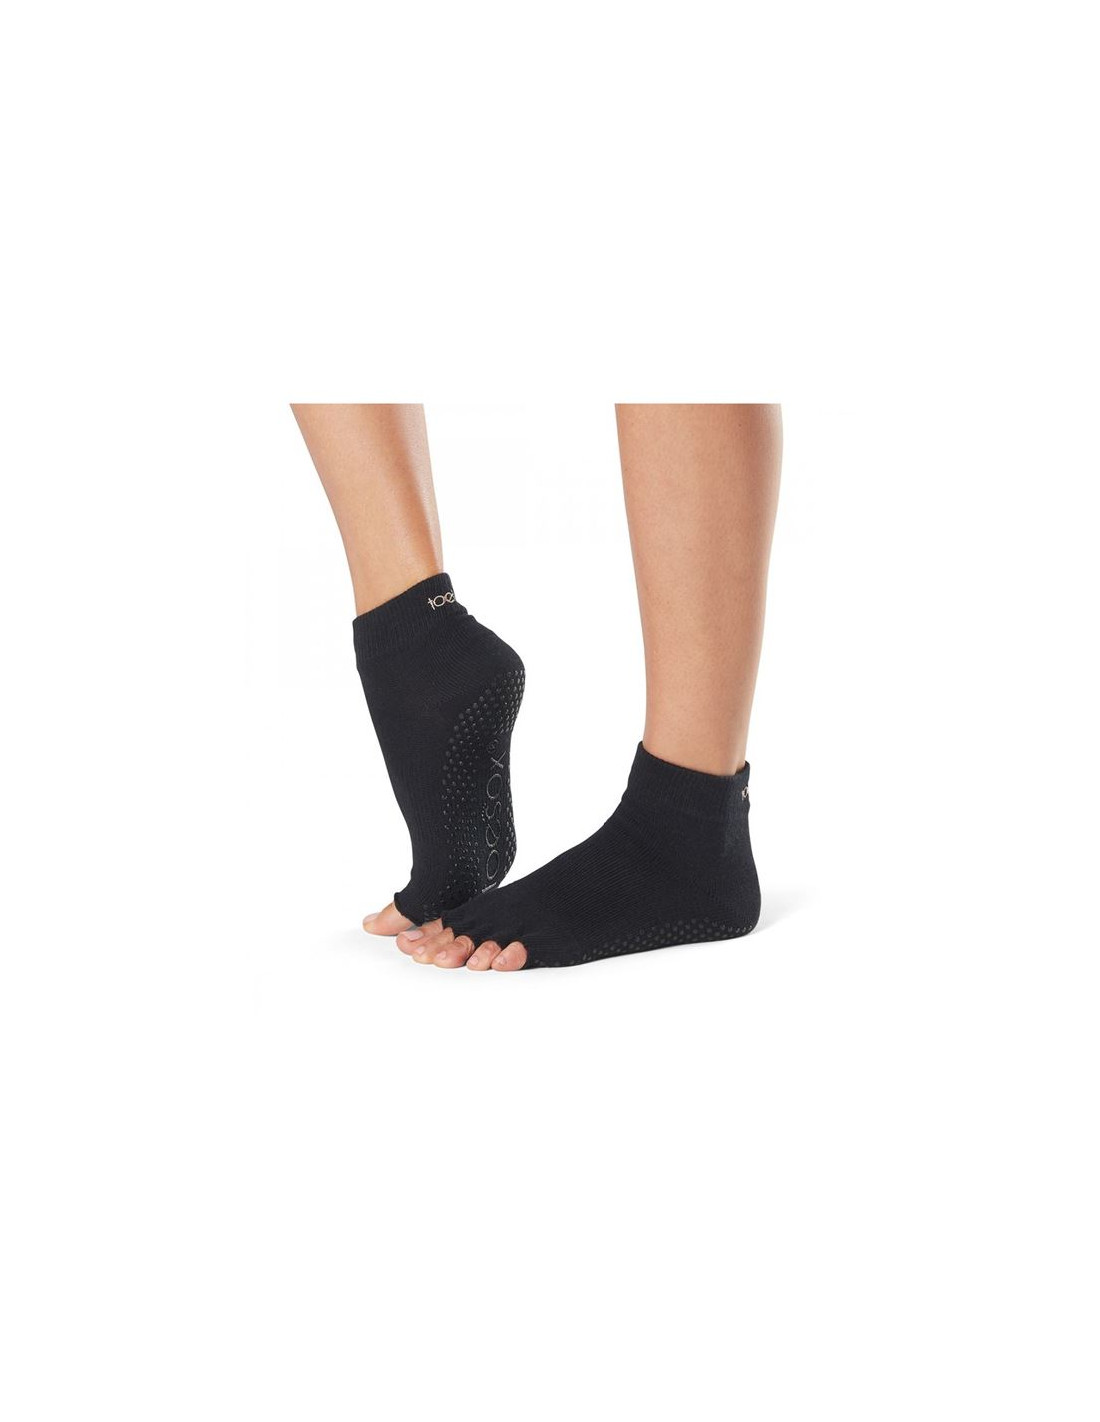 Toesox - calcetin antidezlizante - Ankle sin dedos - Negro